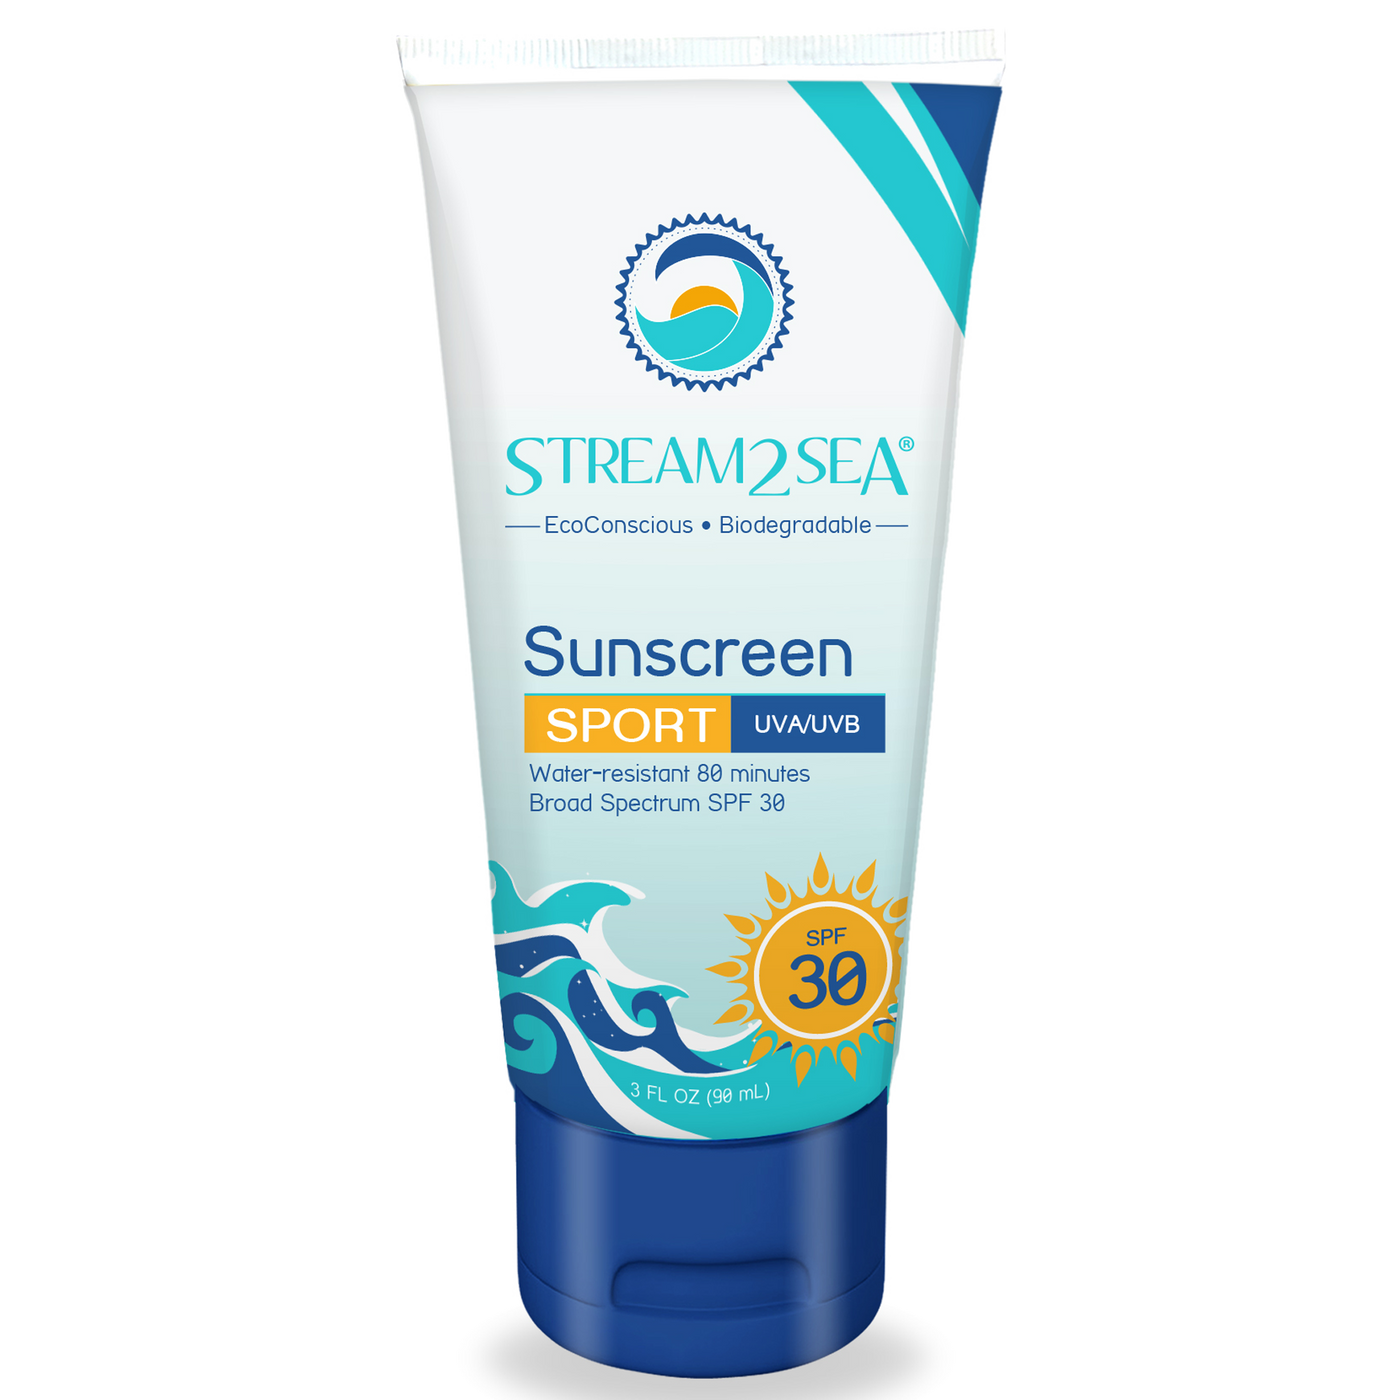 Sunscreen SPF 30 . Curated Wellness